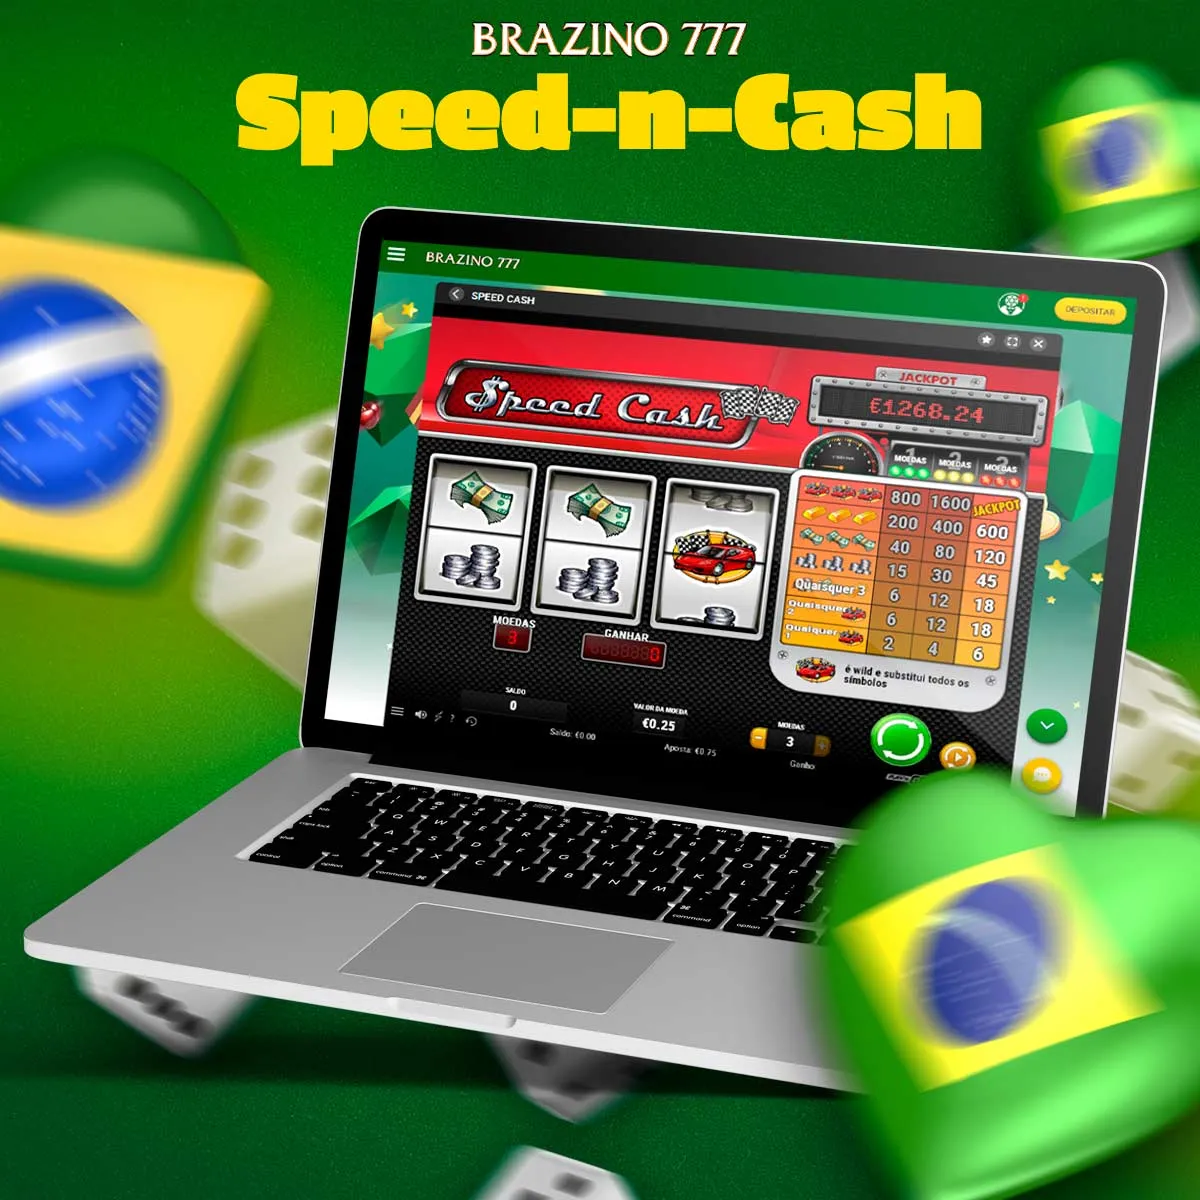 O popular jogo Speed-n-Cash Brazino777